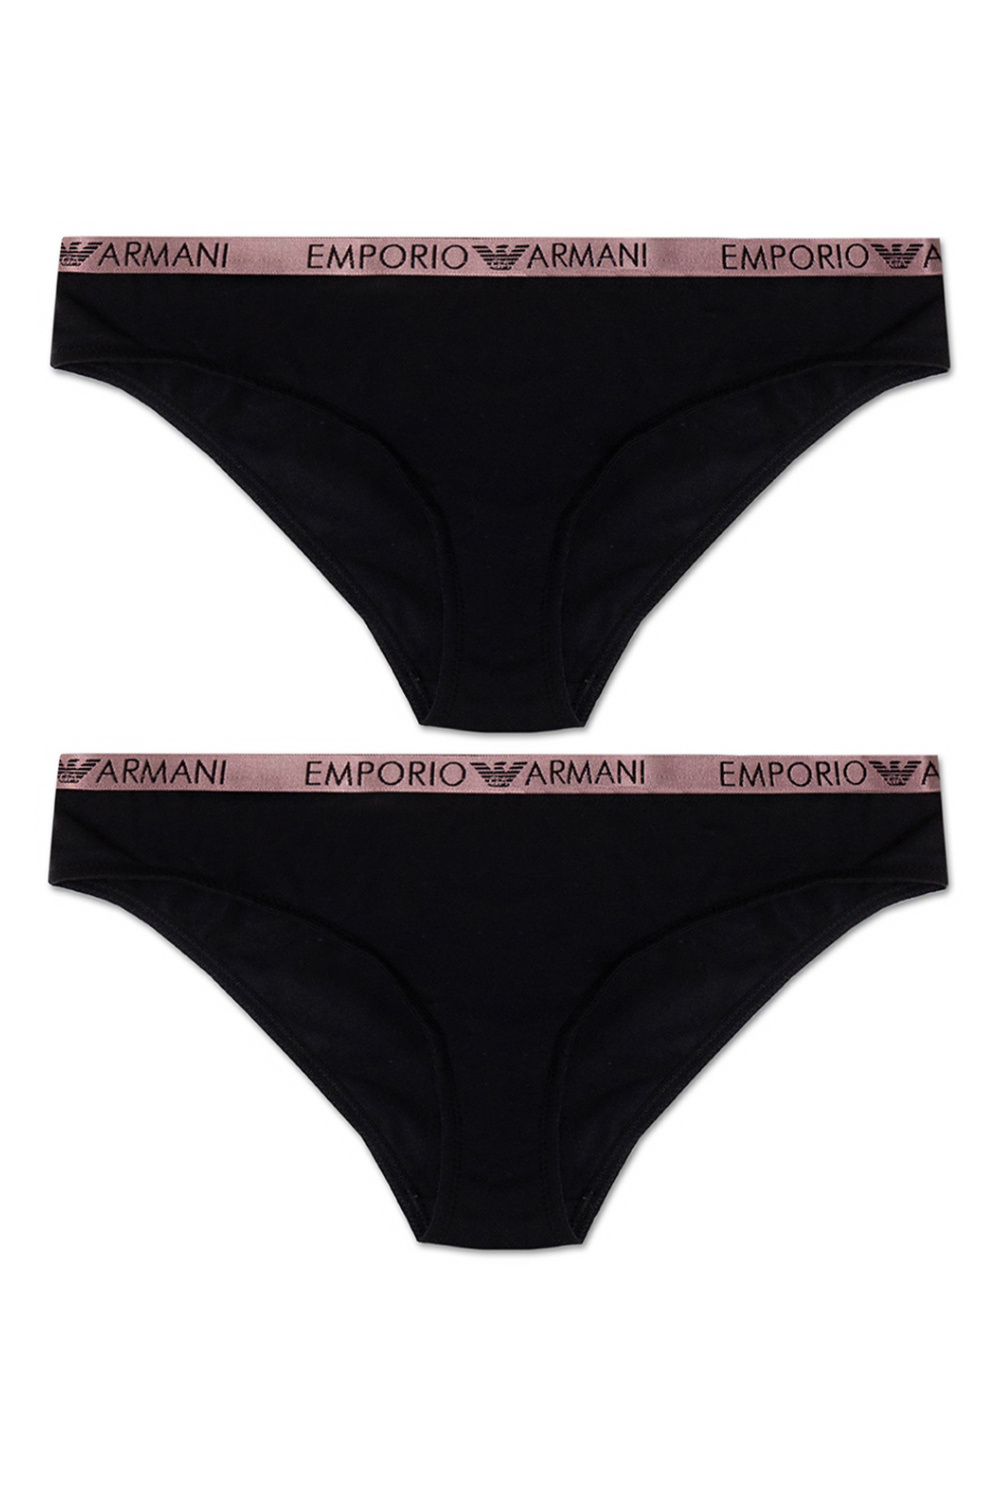 Blue Emporio Armani EA7 Pack Underwear Set - Get The Label